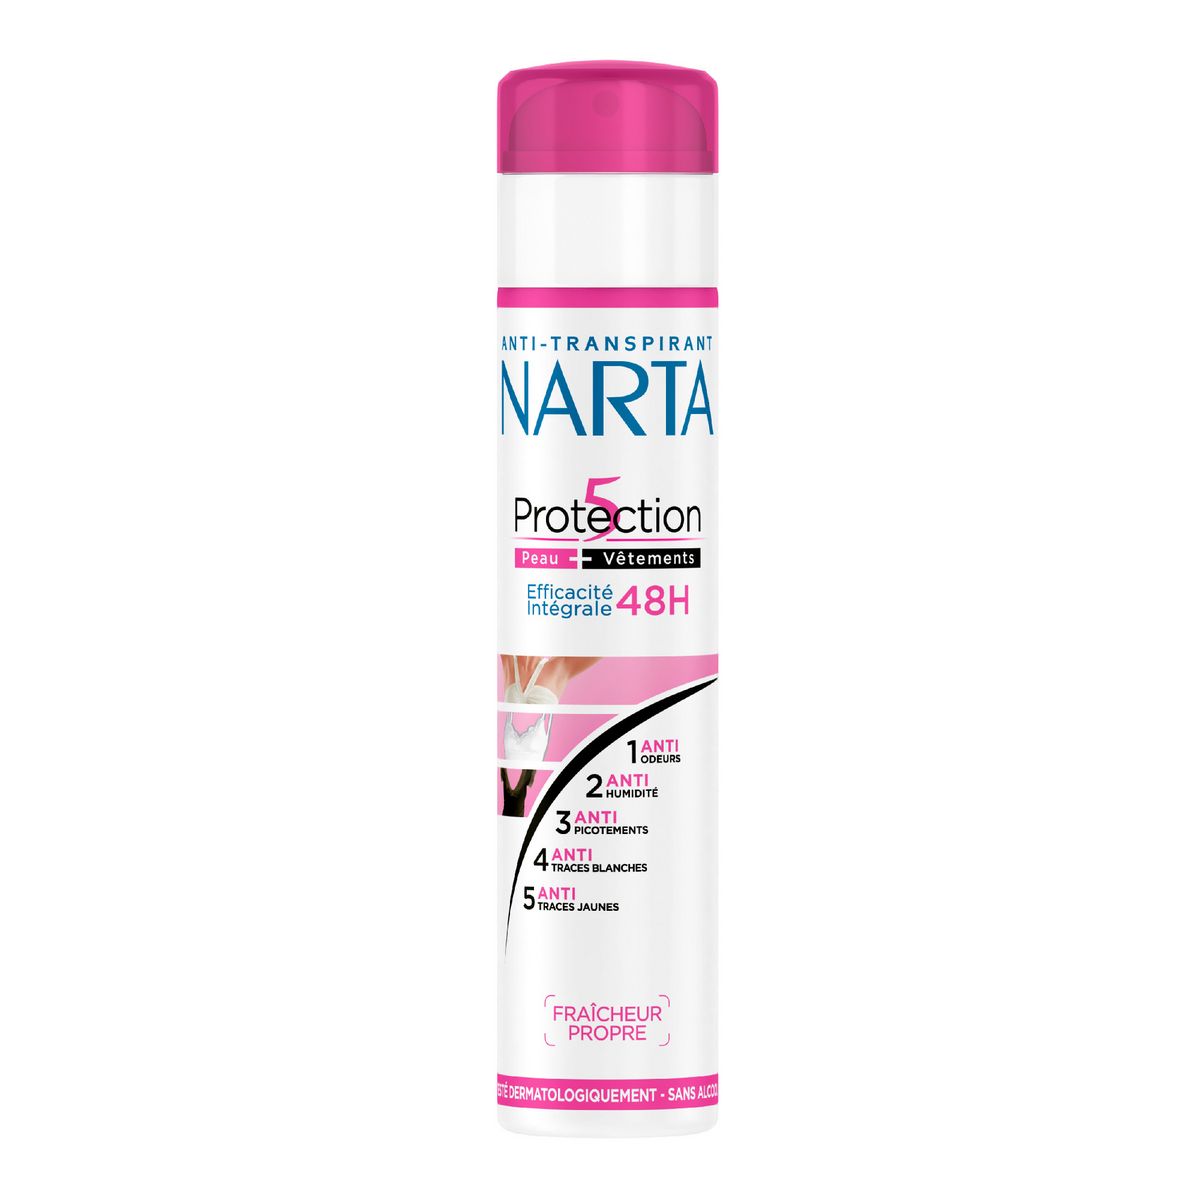 NARTA Déodorant spray 48h fraîcheur propre 200ml